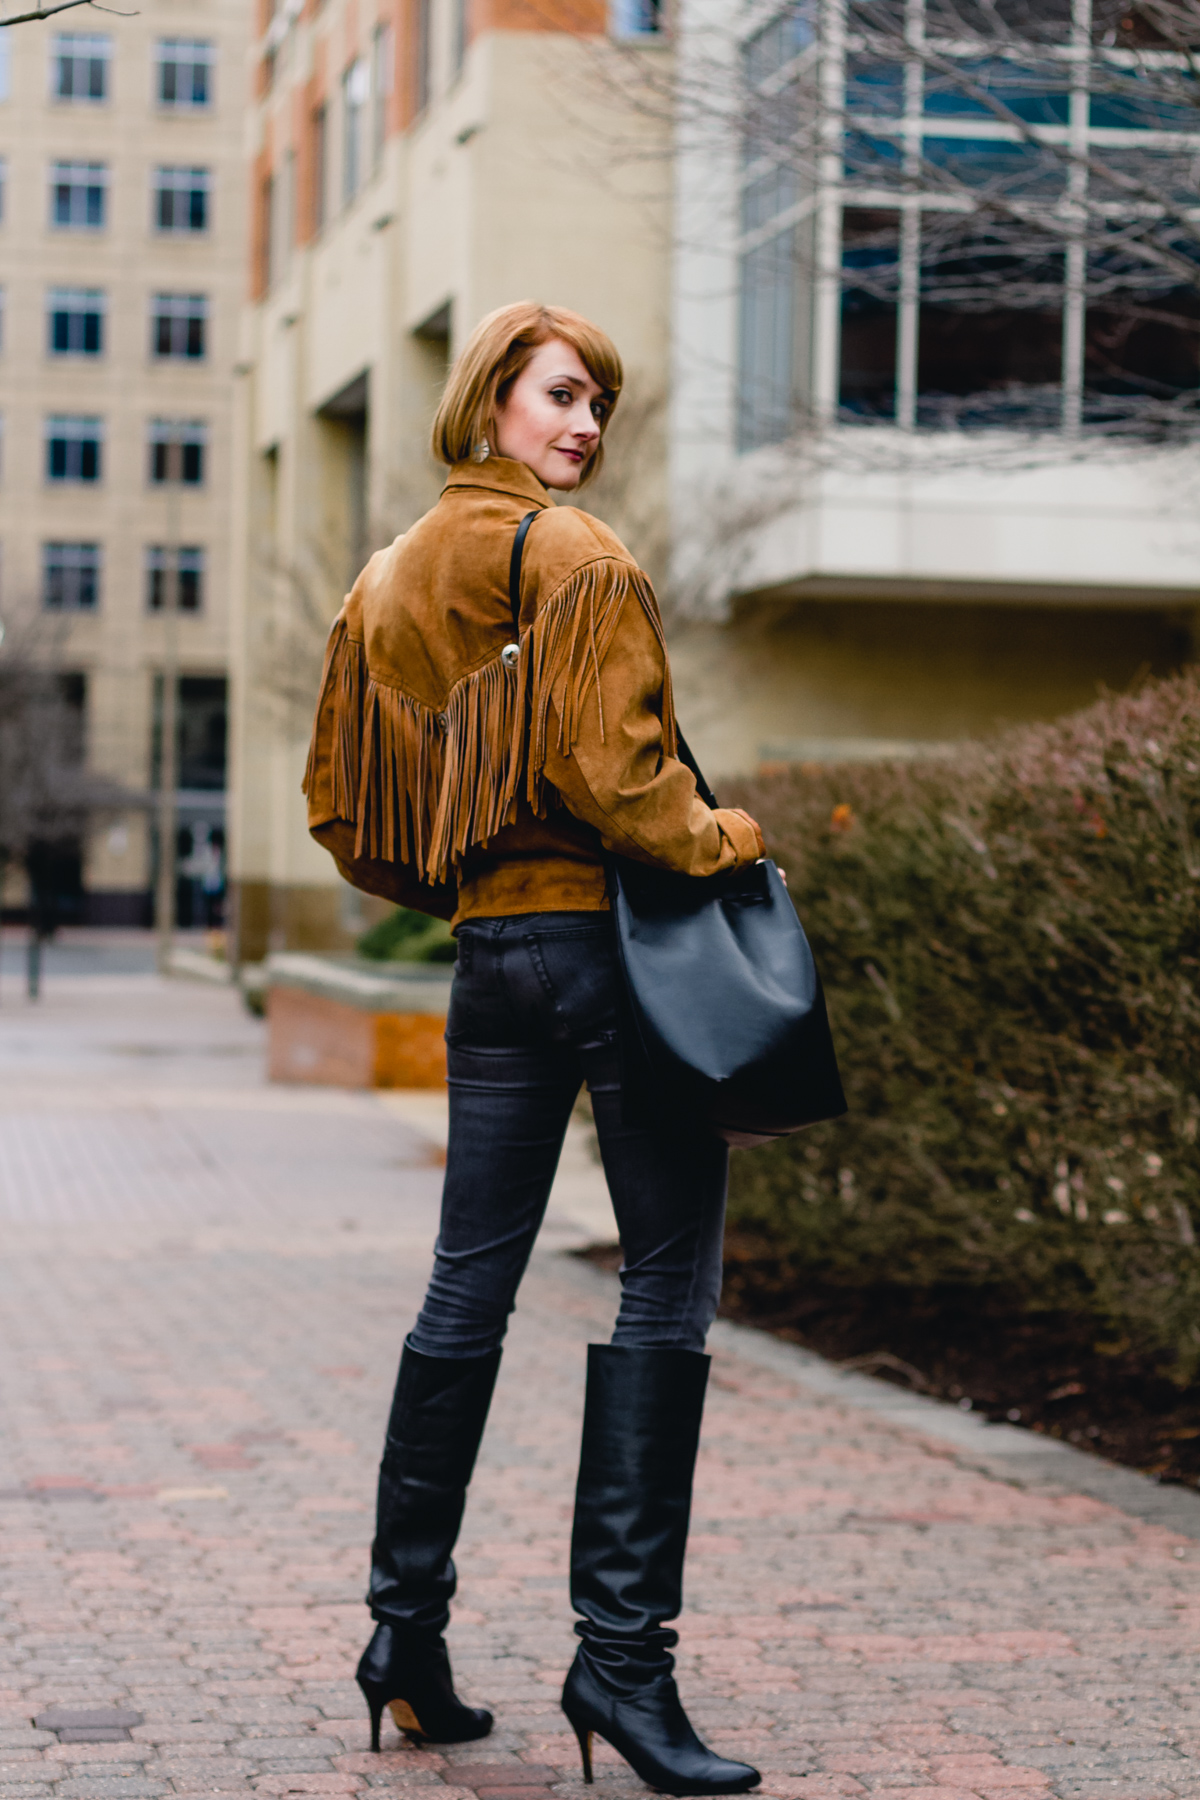 fringe leather jacket and slouchy boots